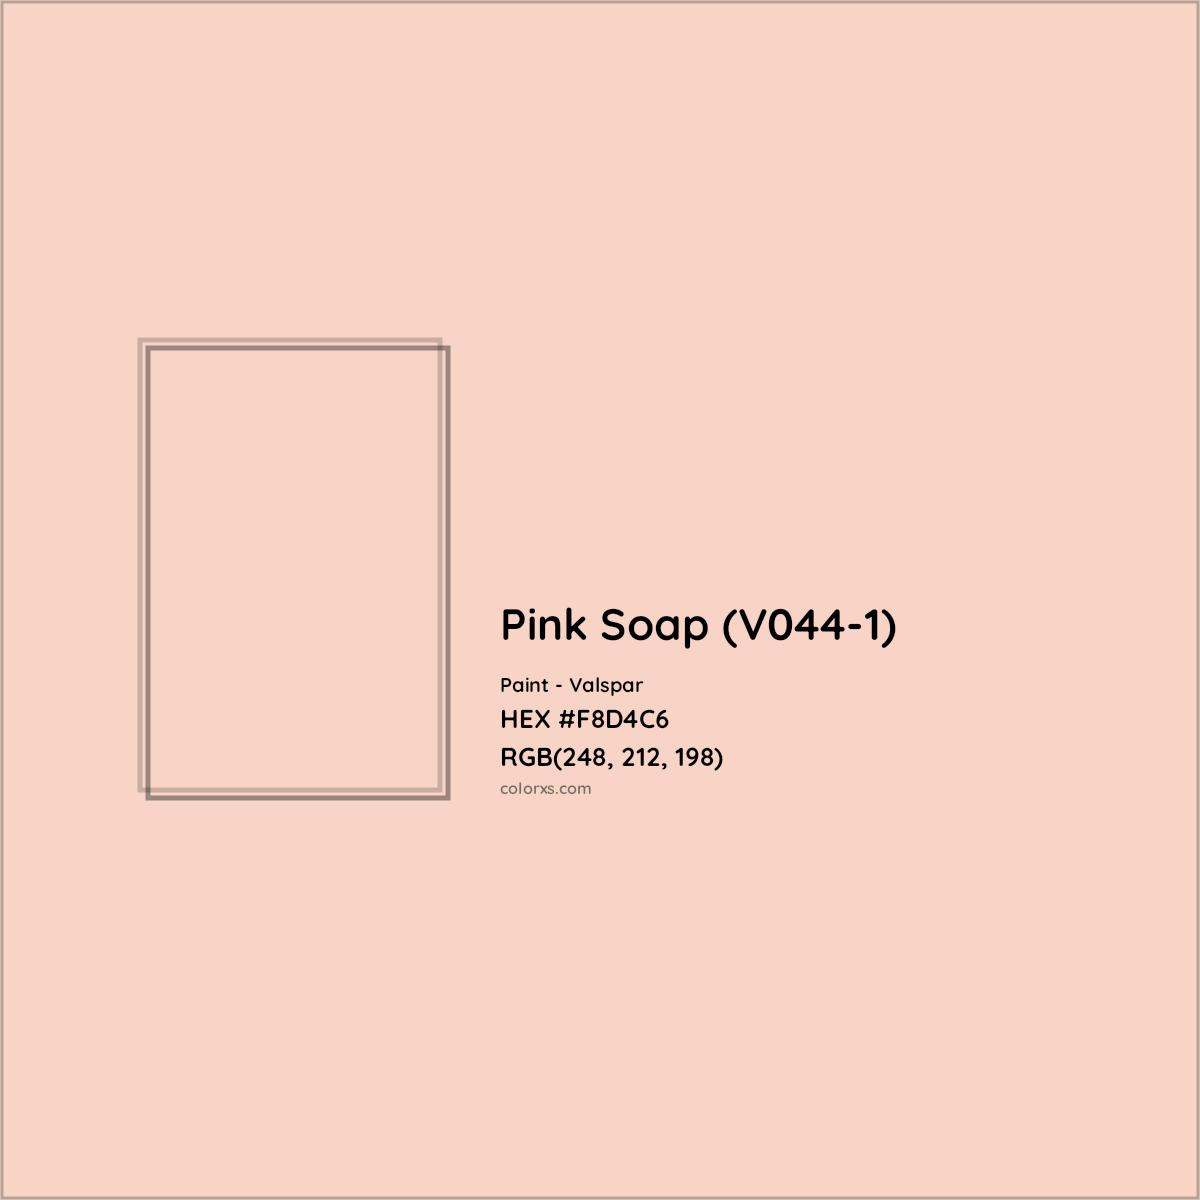 HEX #F8D4C6 Pink Soap (V044-1) Paint Valspar - Color Code